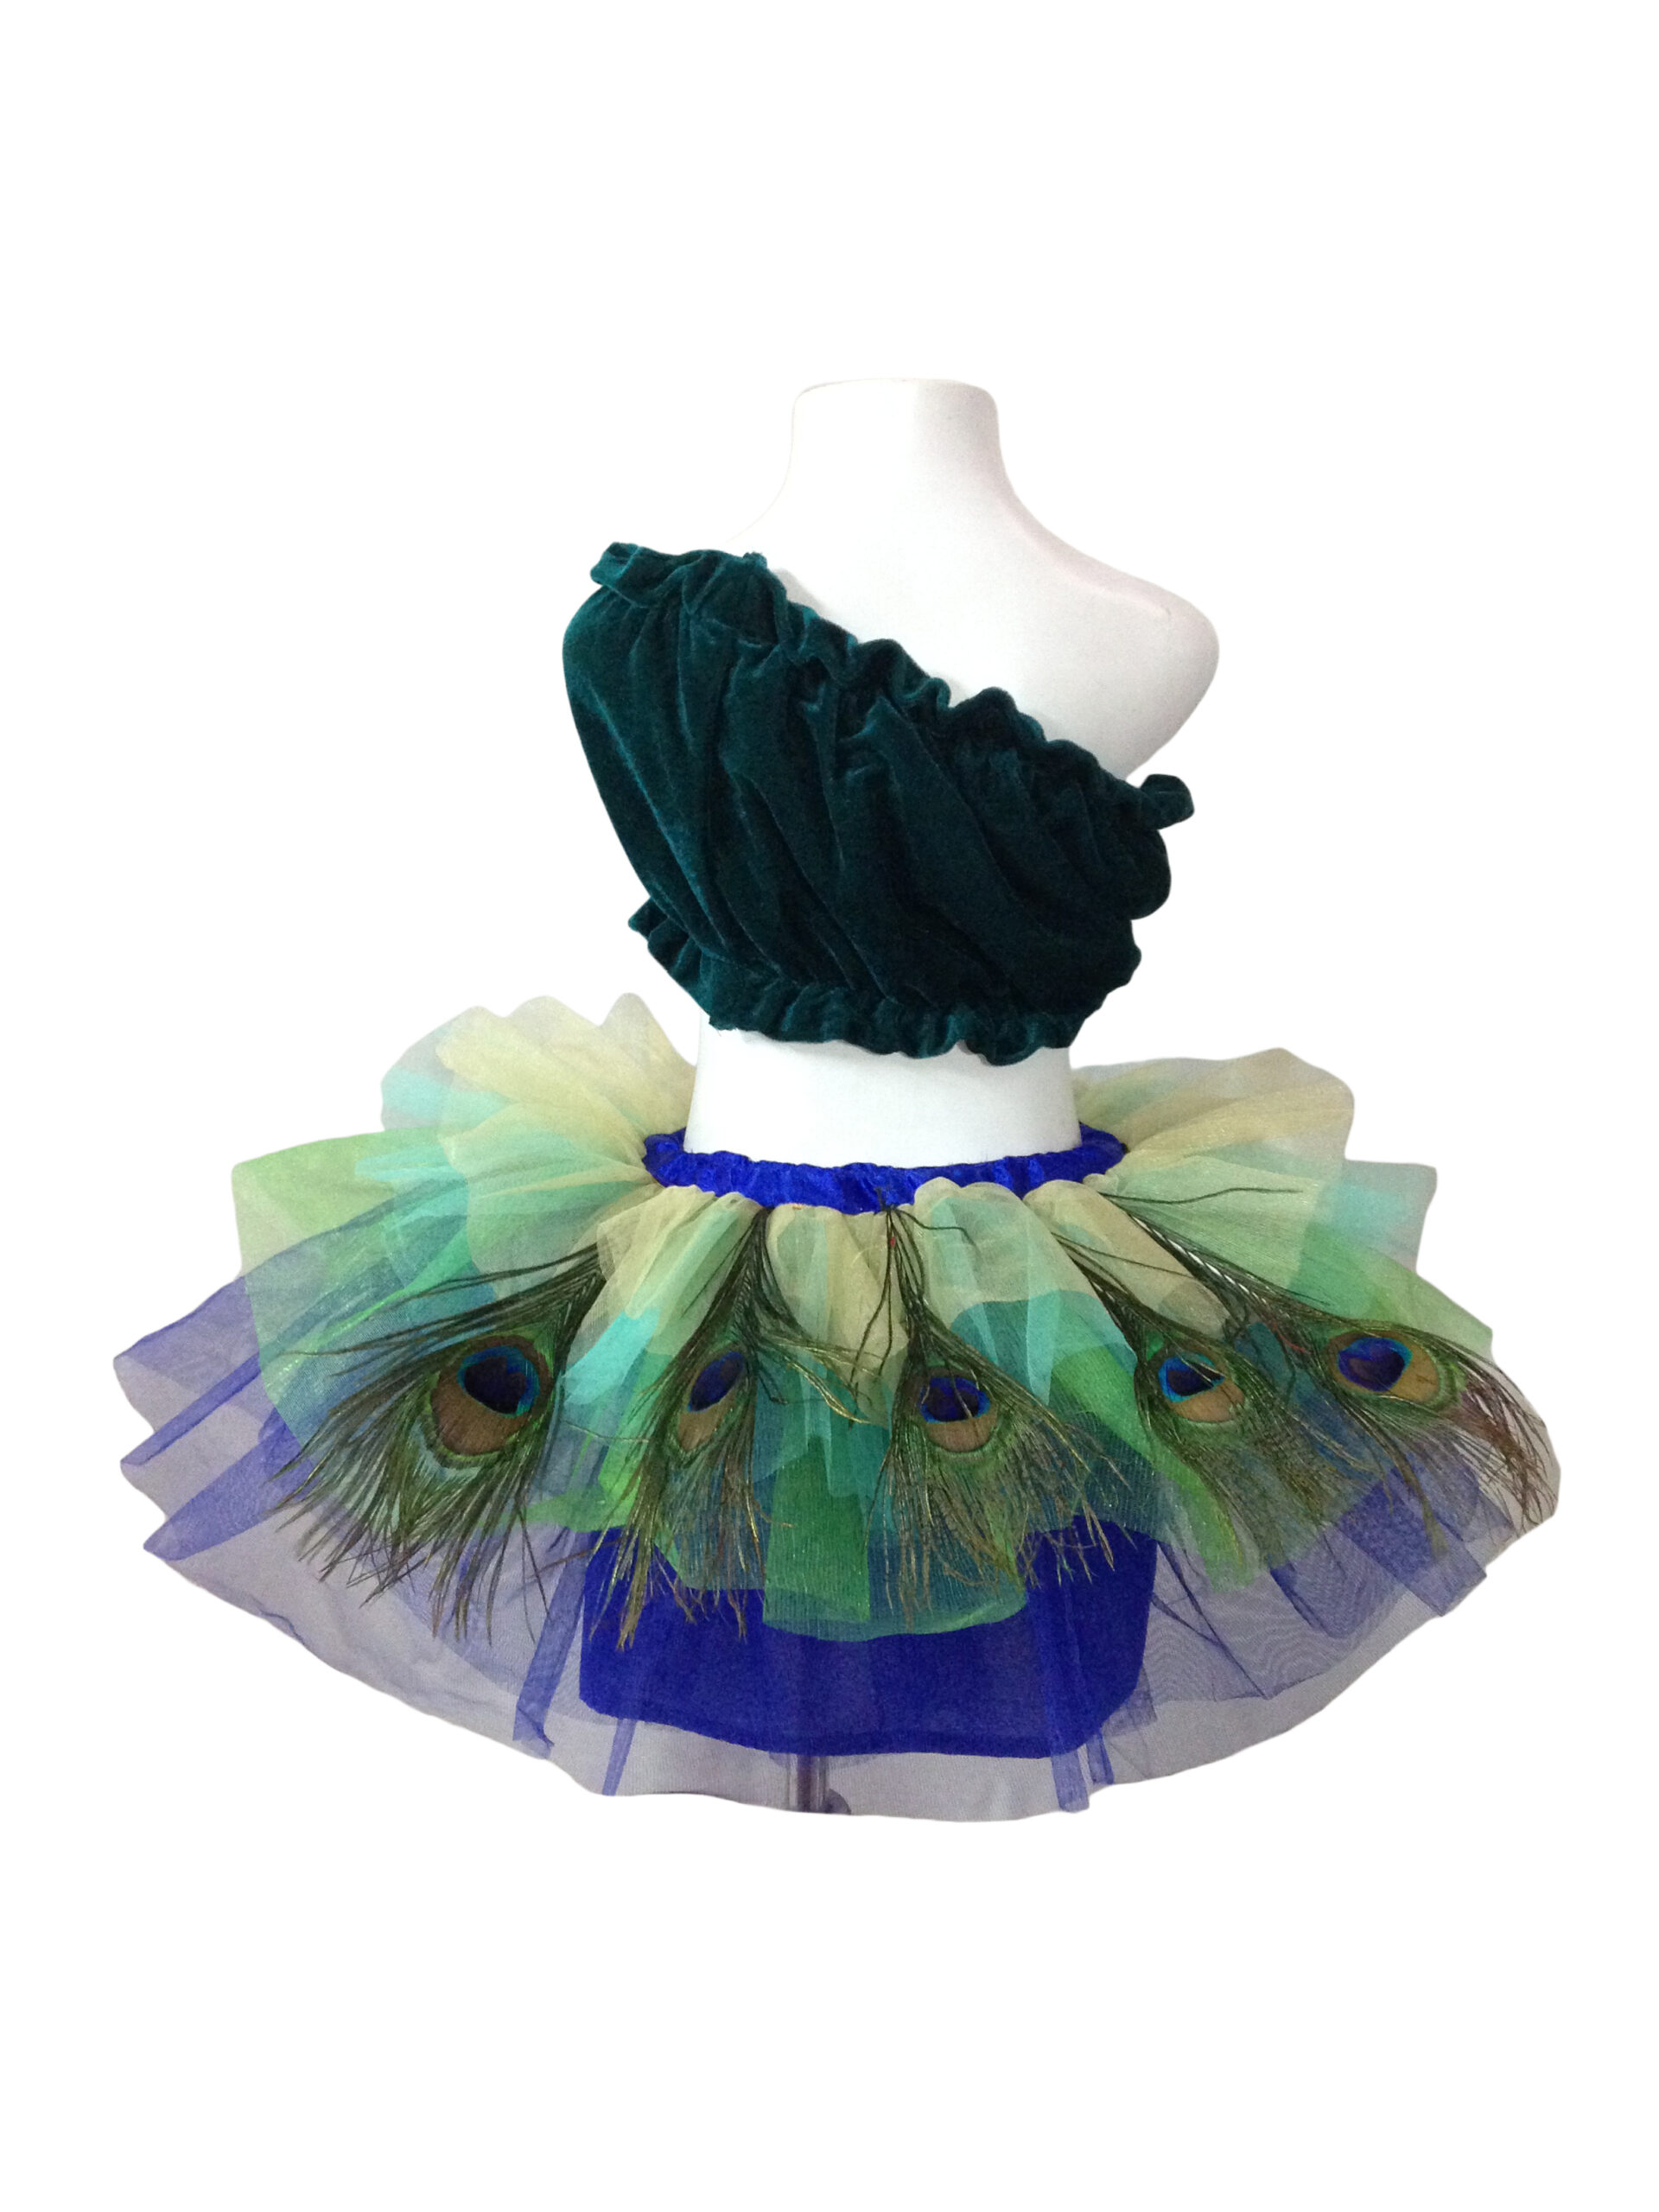 Sparkly Unicorn Rainbow Tutu Skirt And Accessory Set